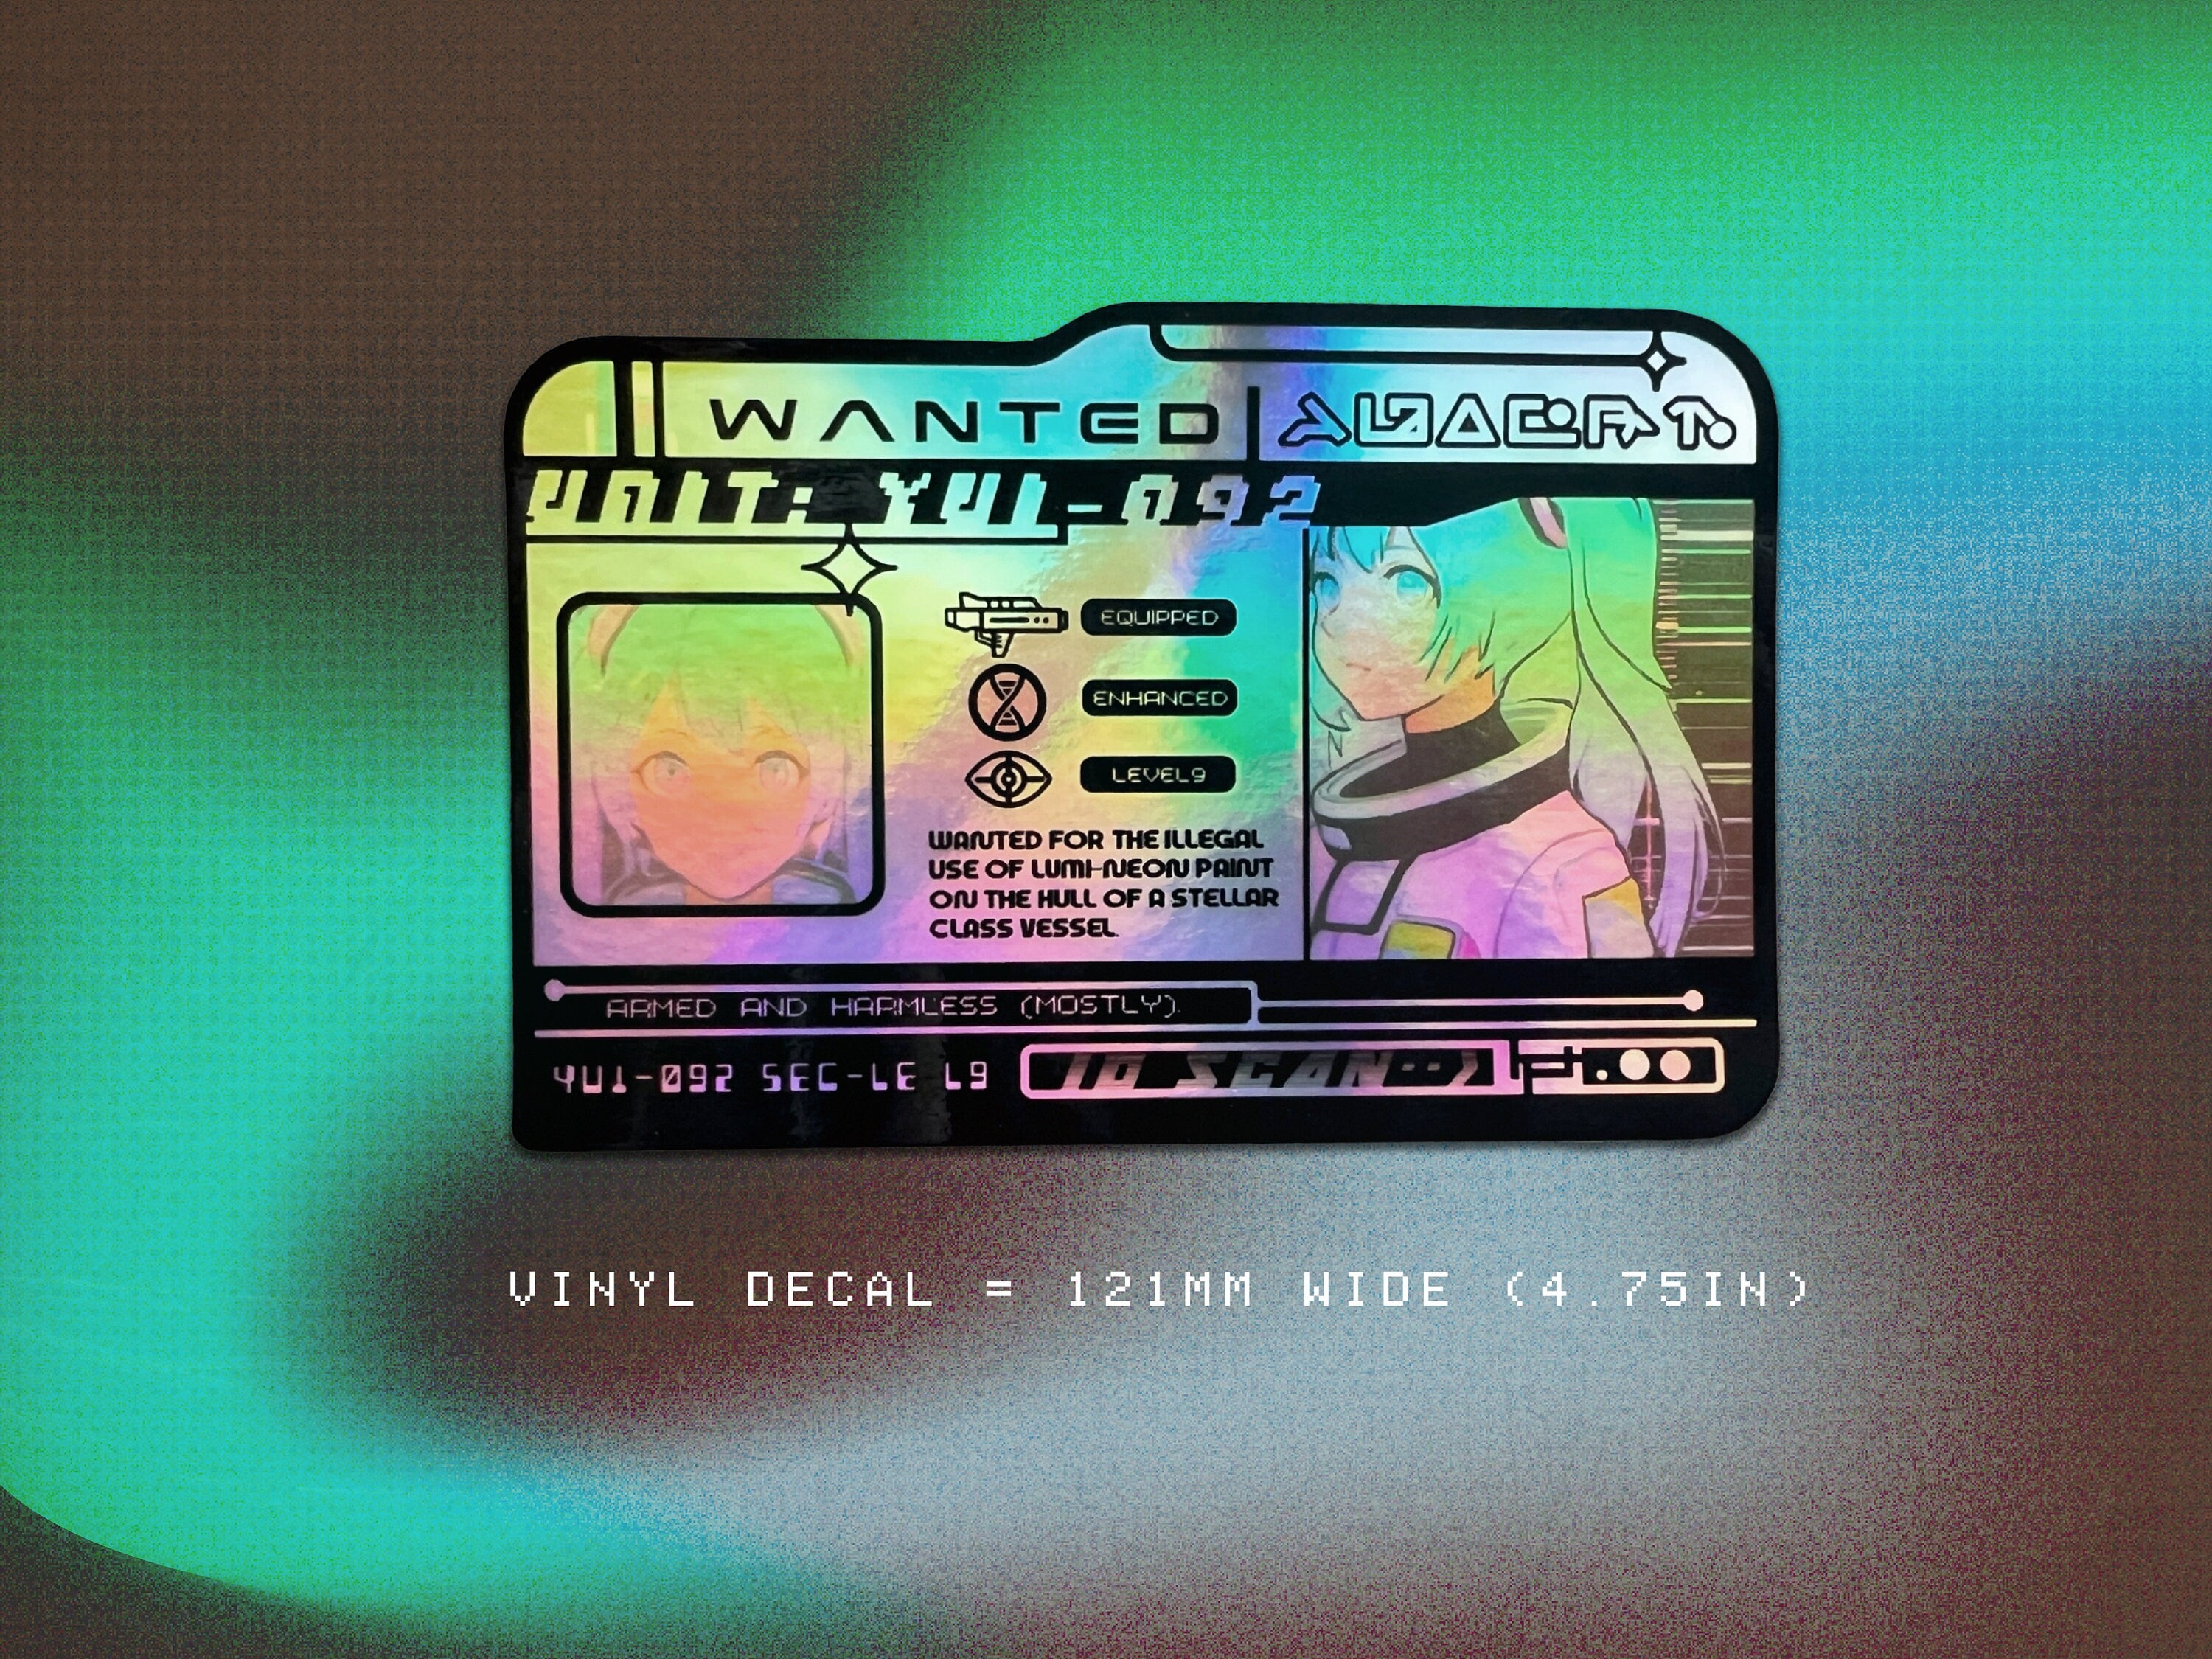 Yui Unit-092 Holographic Vinyl Decal - Cyberpunk / Vaporwave Laptop Sticker - Futuristic Astropunk / Space Sci-Fi Thermos Decal